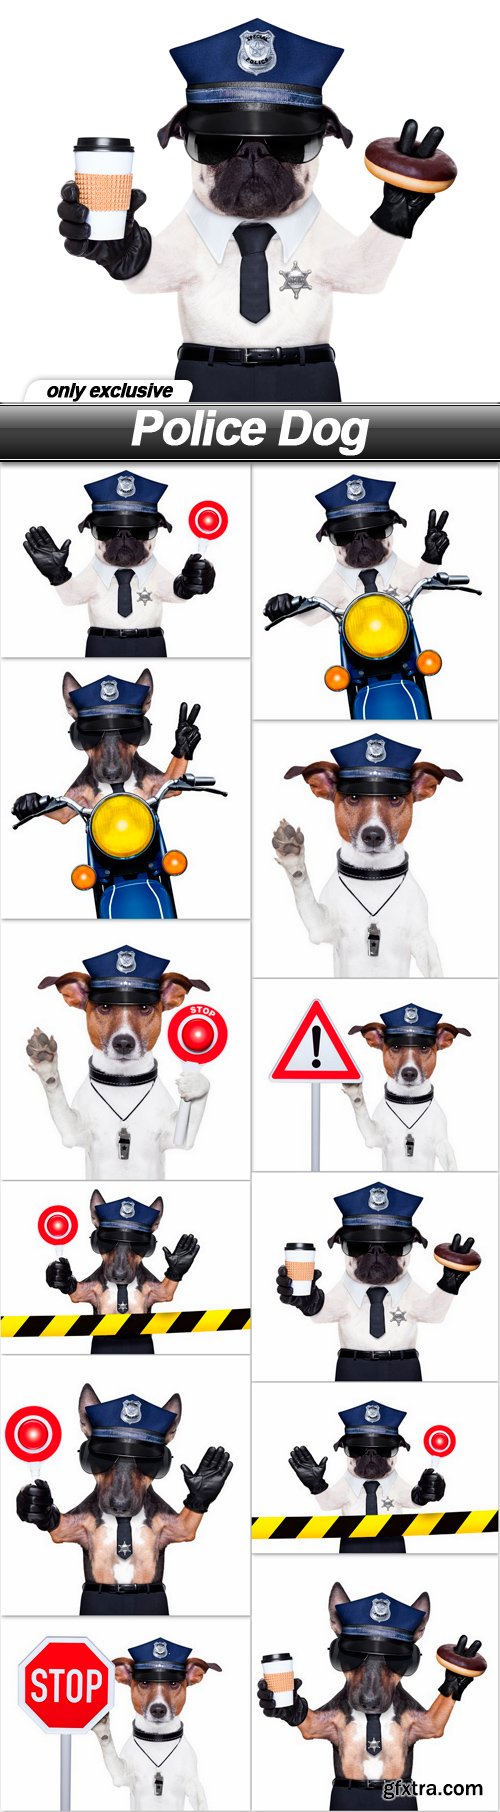 Police Dog - 12 UHQ JPEG